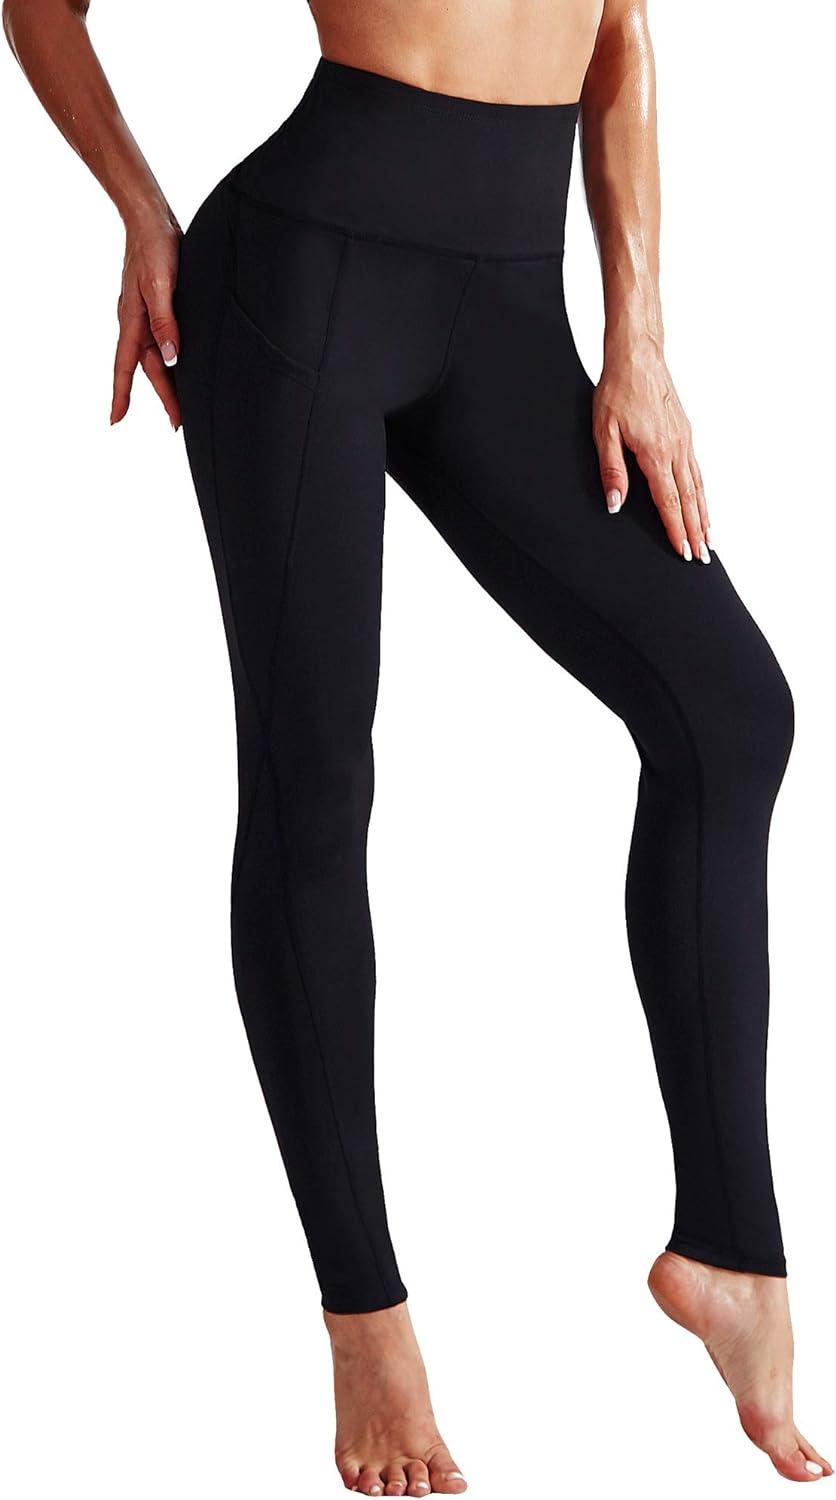  NELEUS 3 Pack Workout Running Capris Tummy Control High  Waist Yoga Leggings Yoga Pants